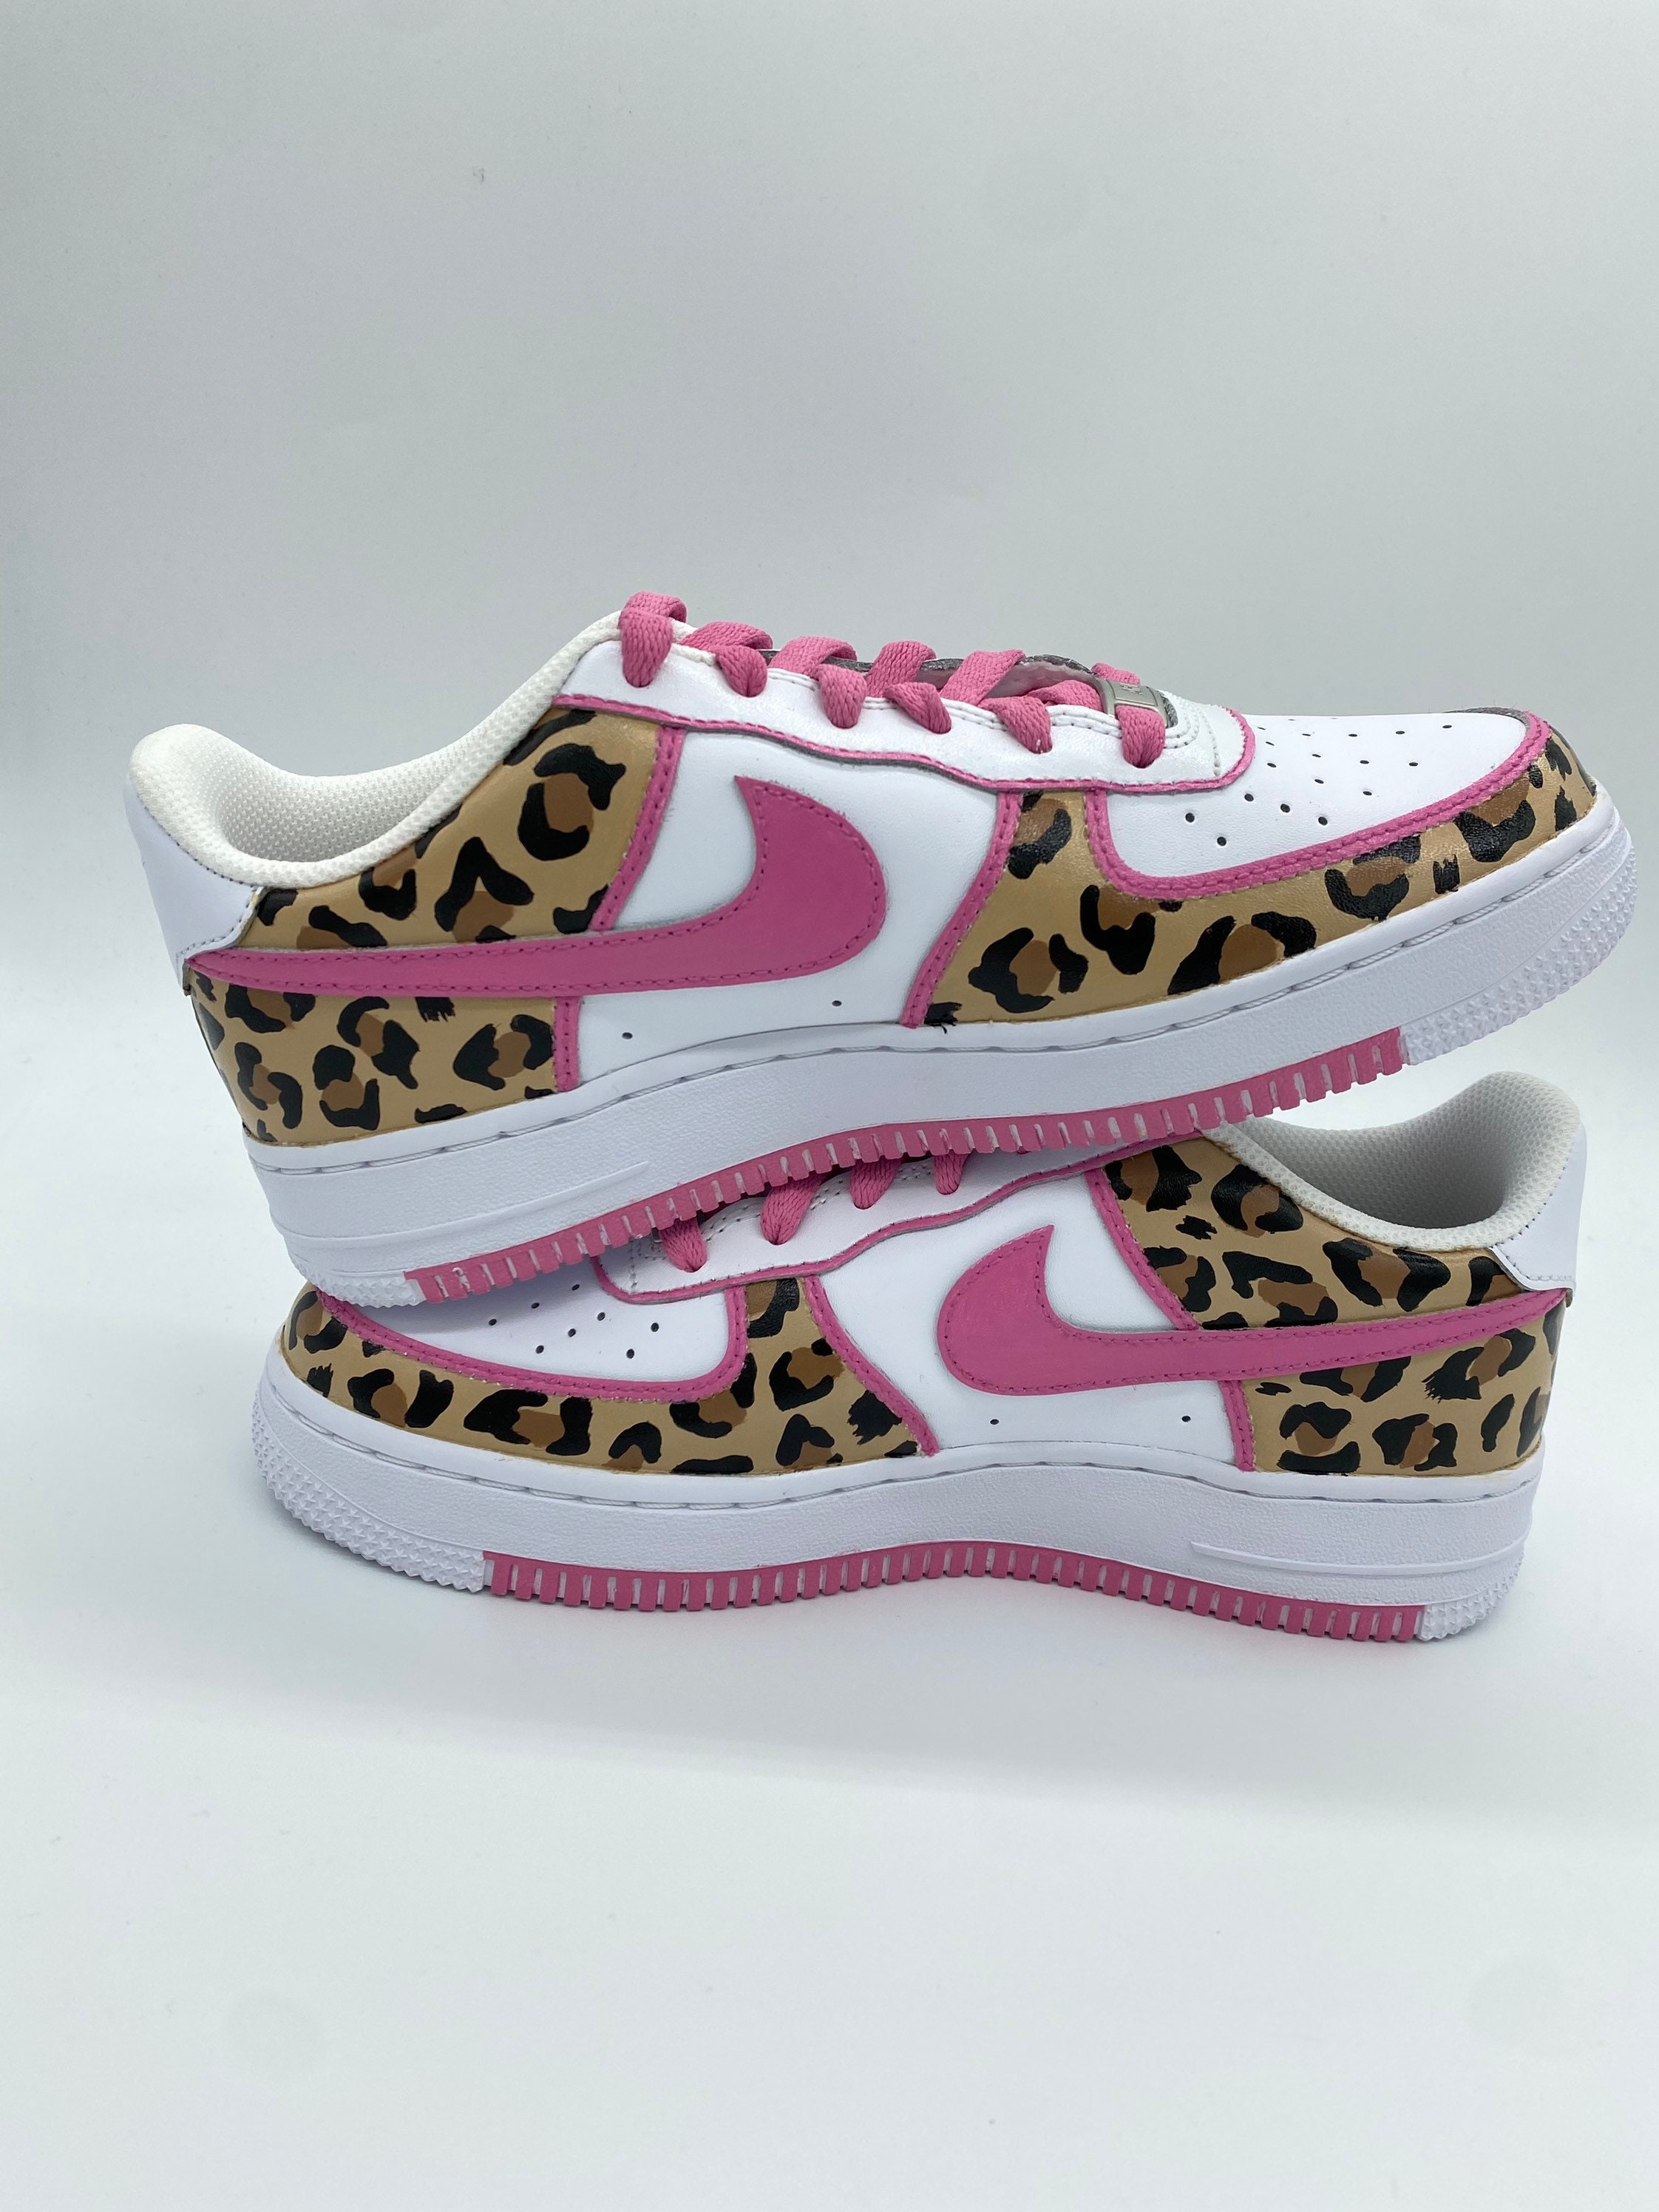 Nike leopardo - Etsy México